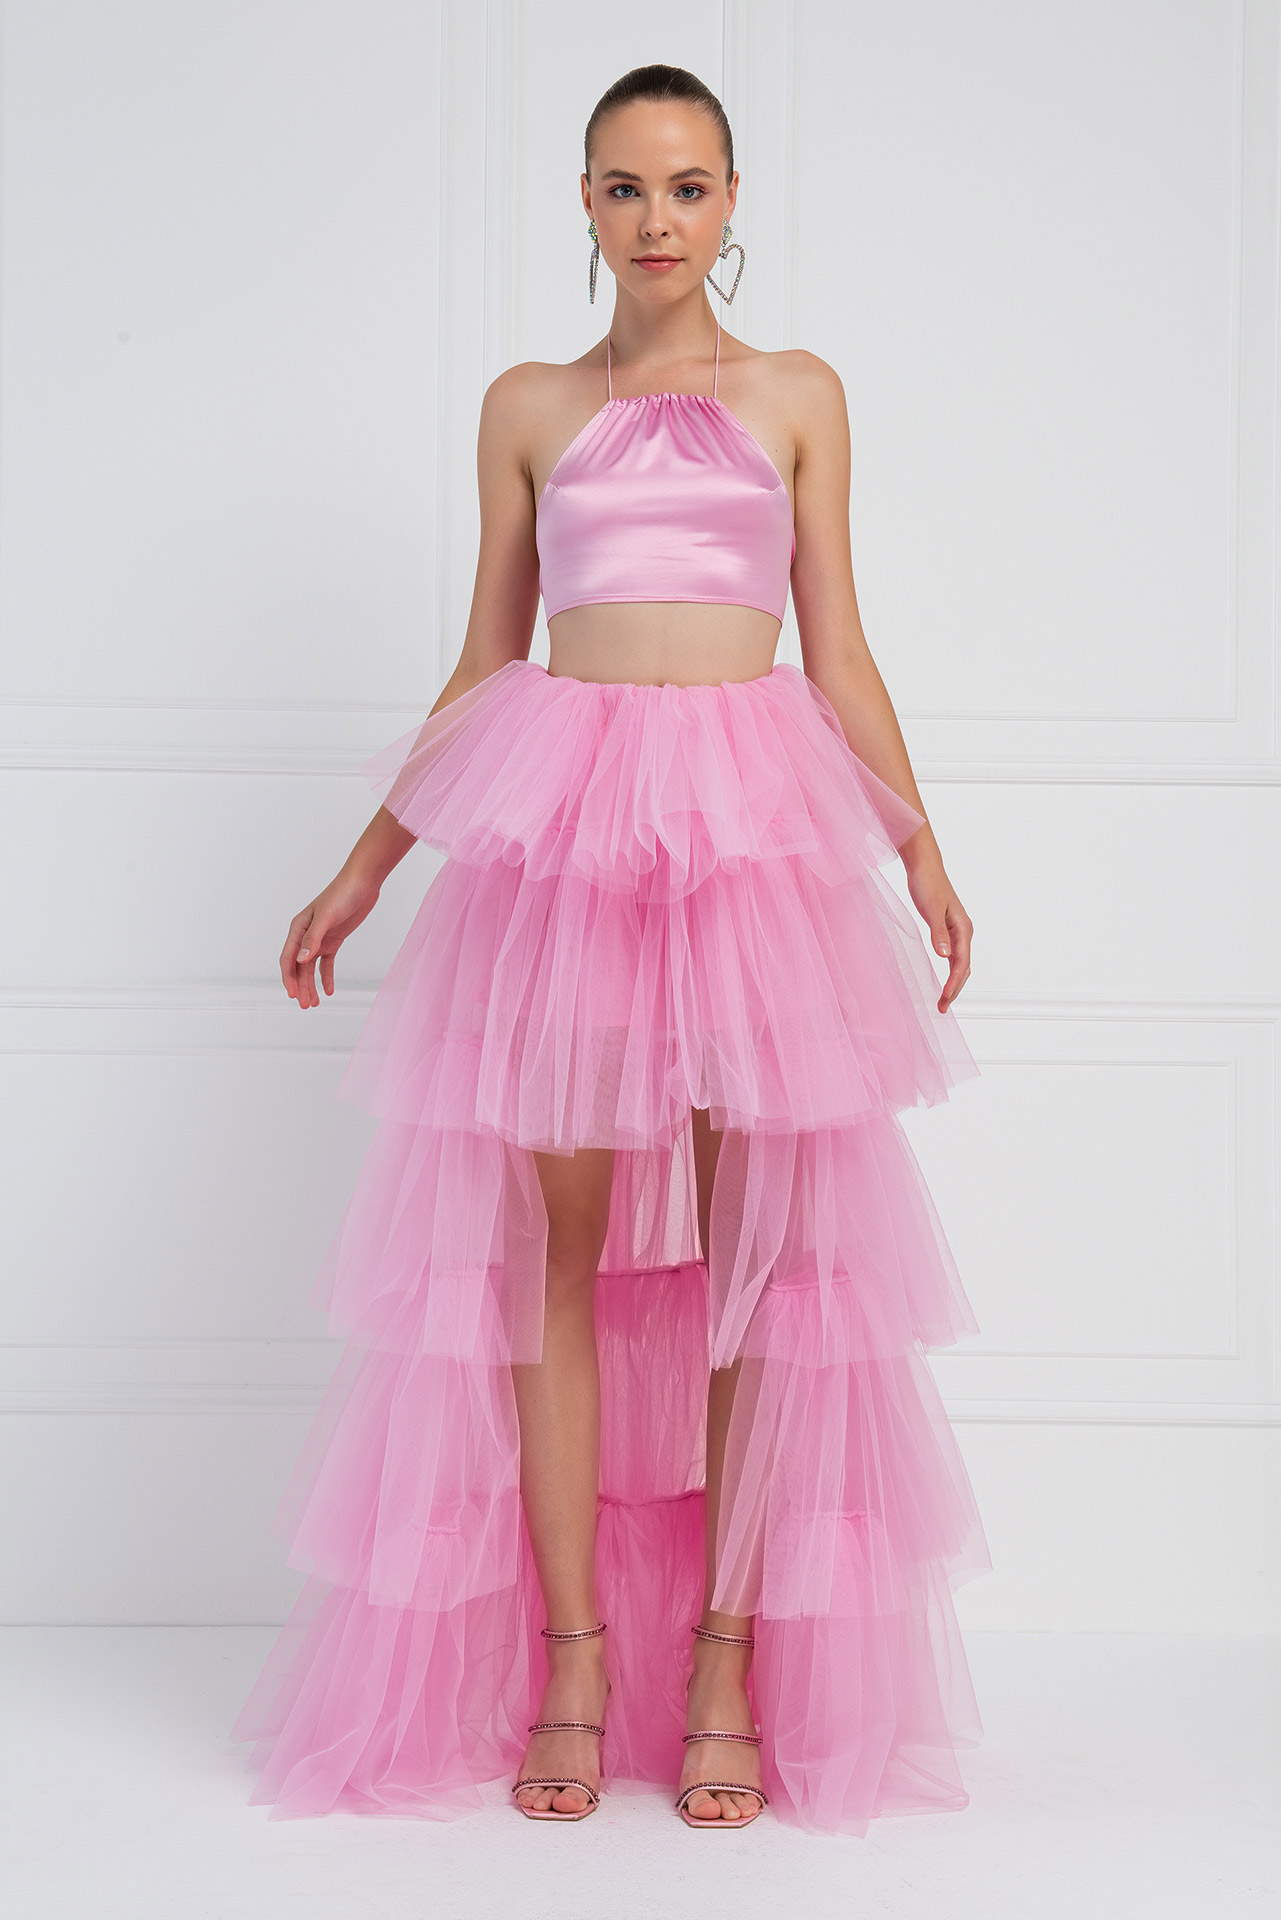 Wholesale New Pink Mini Tulle Skirt